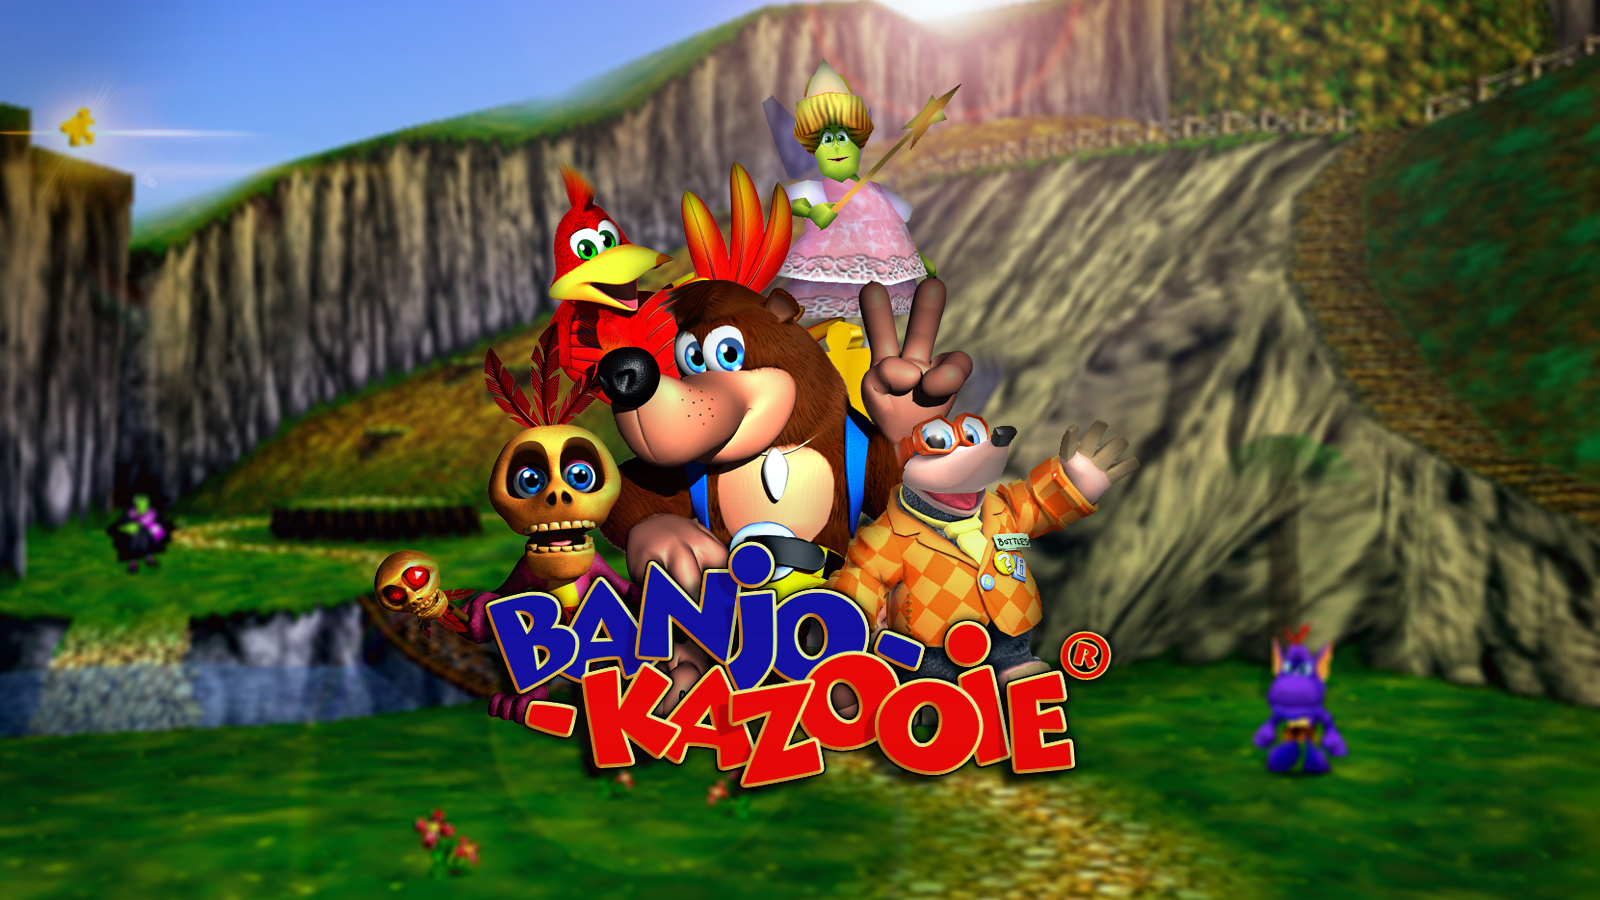 Banjo Kazooie meets The Legend of Zelda in this free fan game